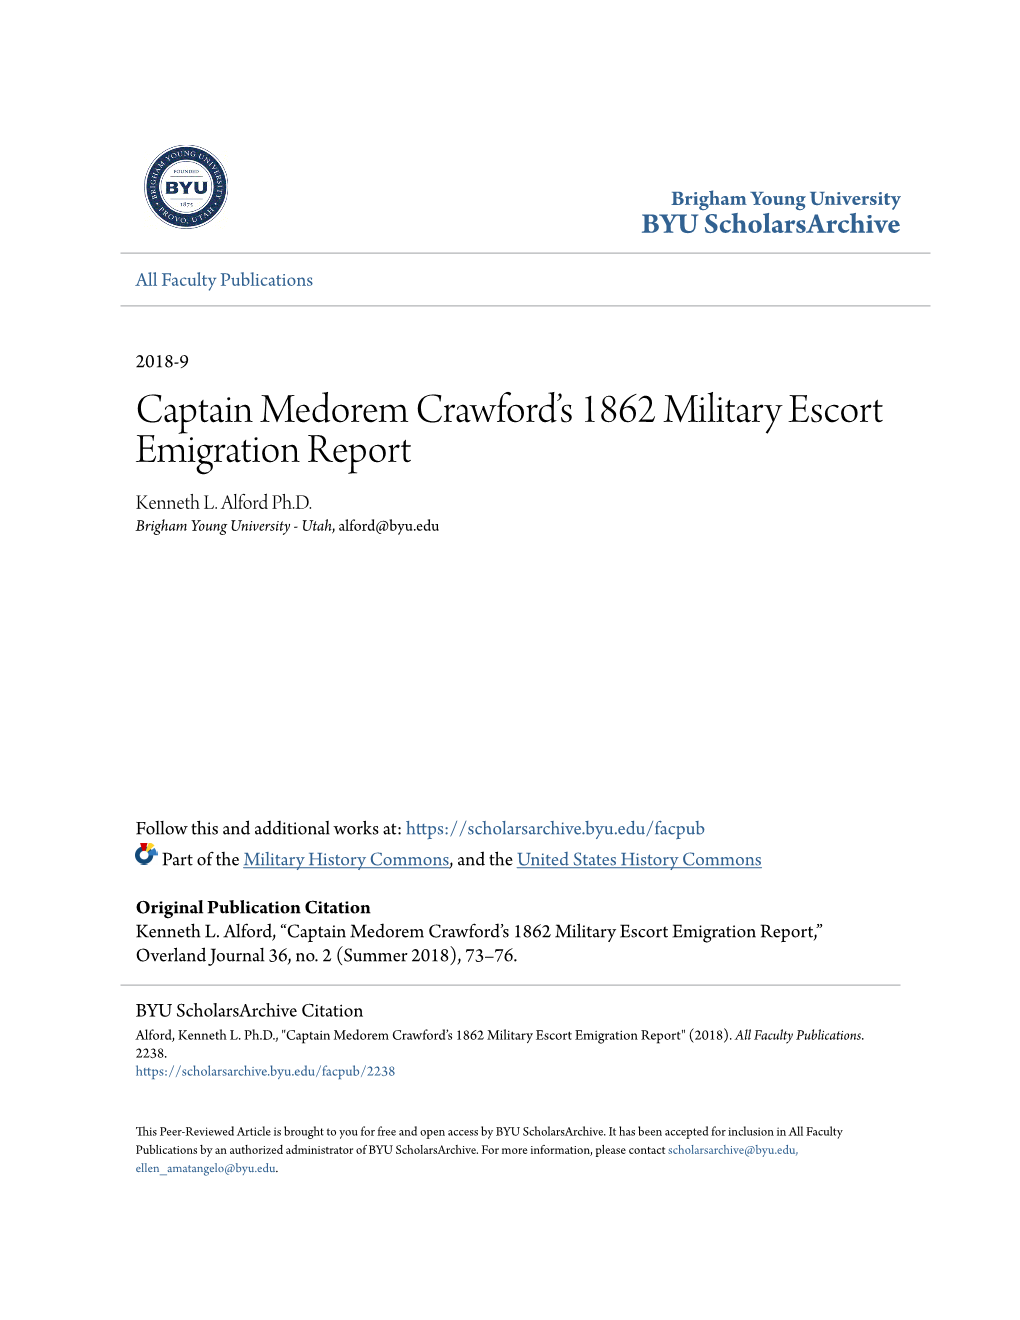 Captain Medorem Crawford's 1862 Military Escort Emigration Report